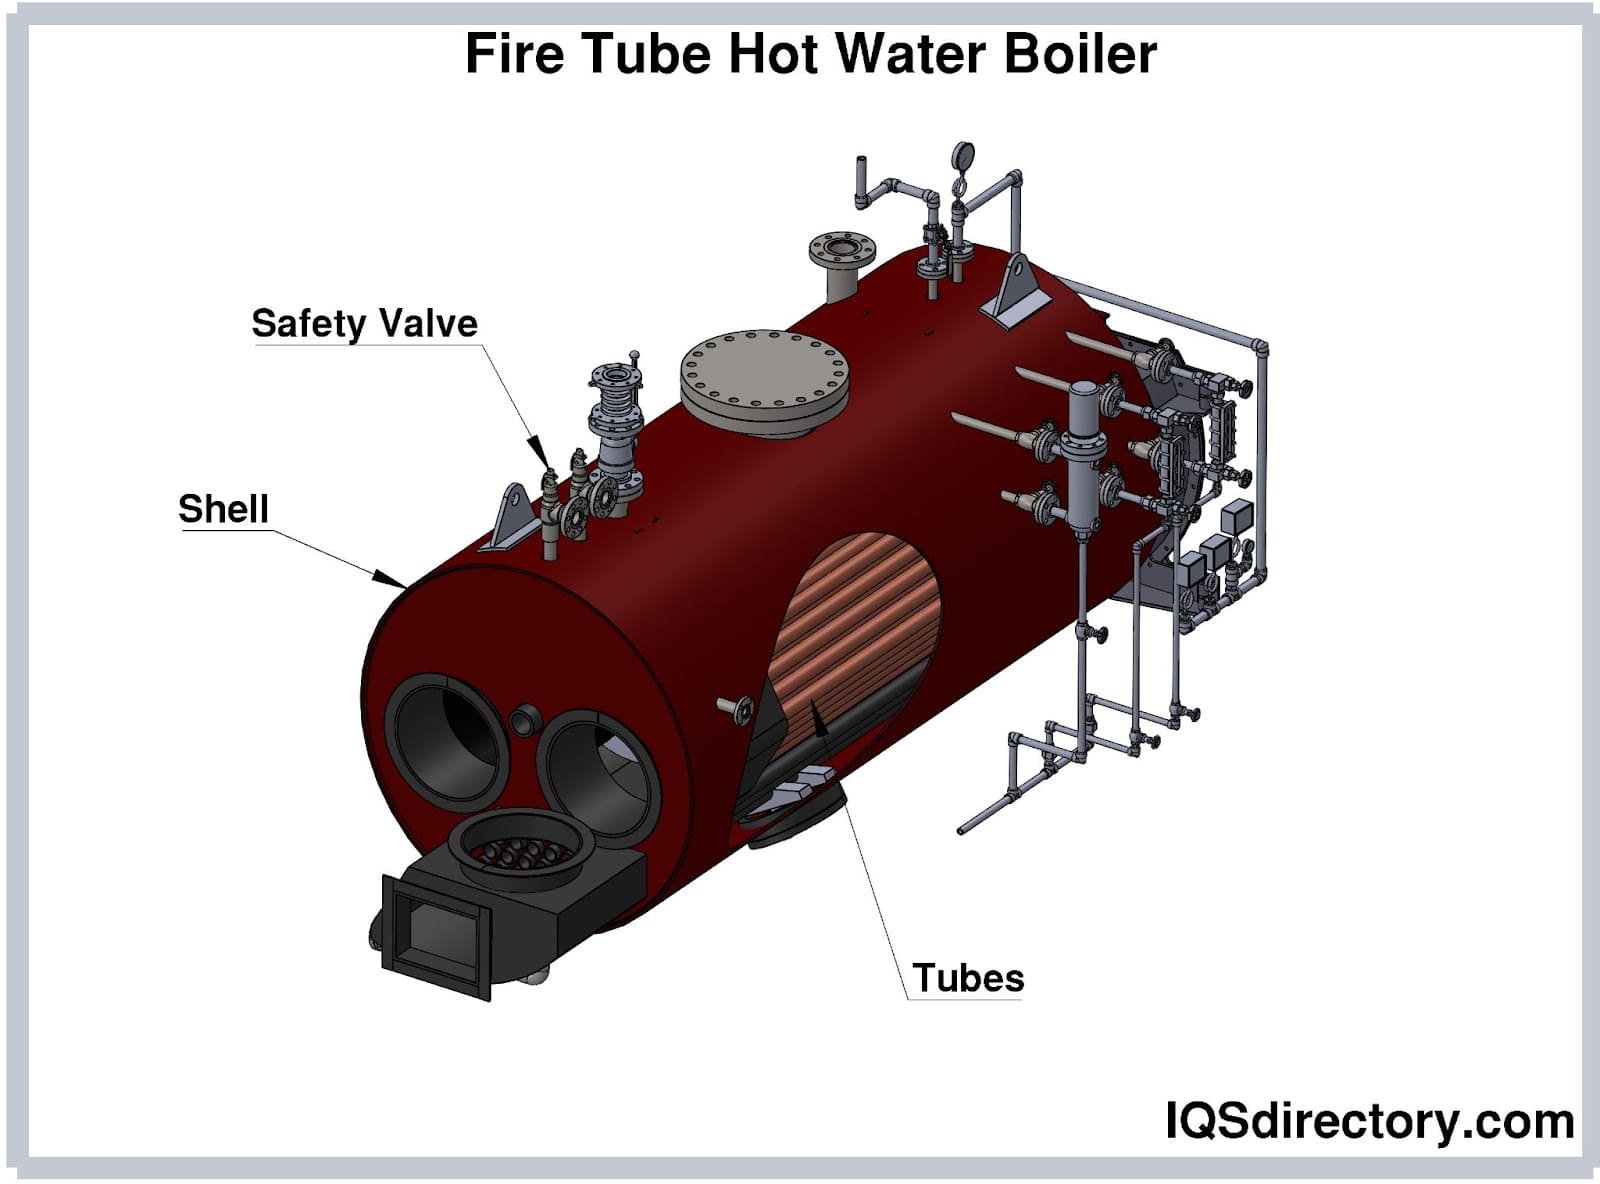 https://www.iqsdirectory.com/articles/boiler/steam-boilers/fire-tube-hot-water-boiler.jpg